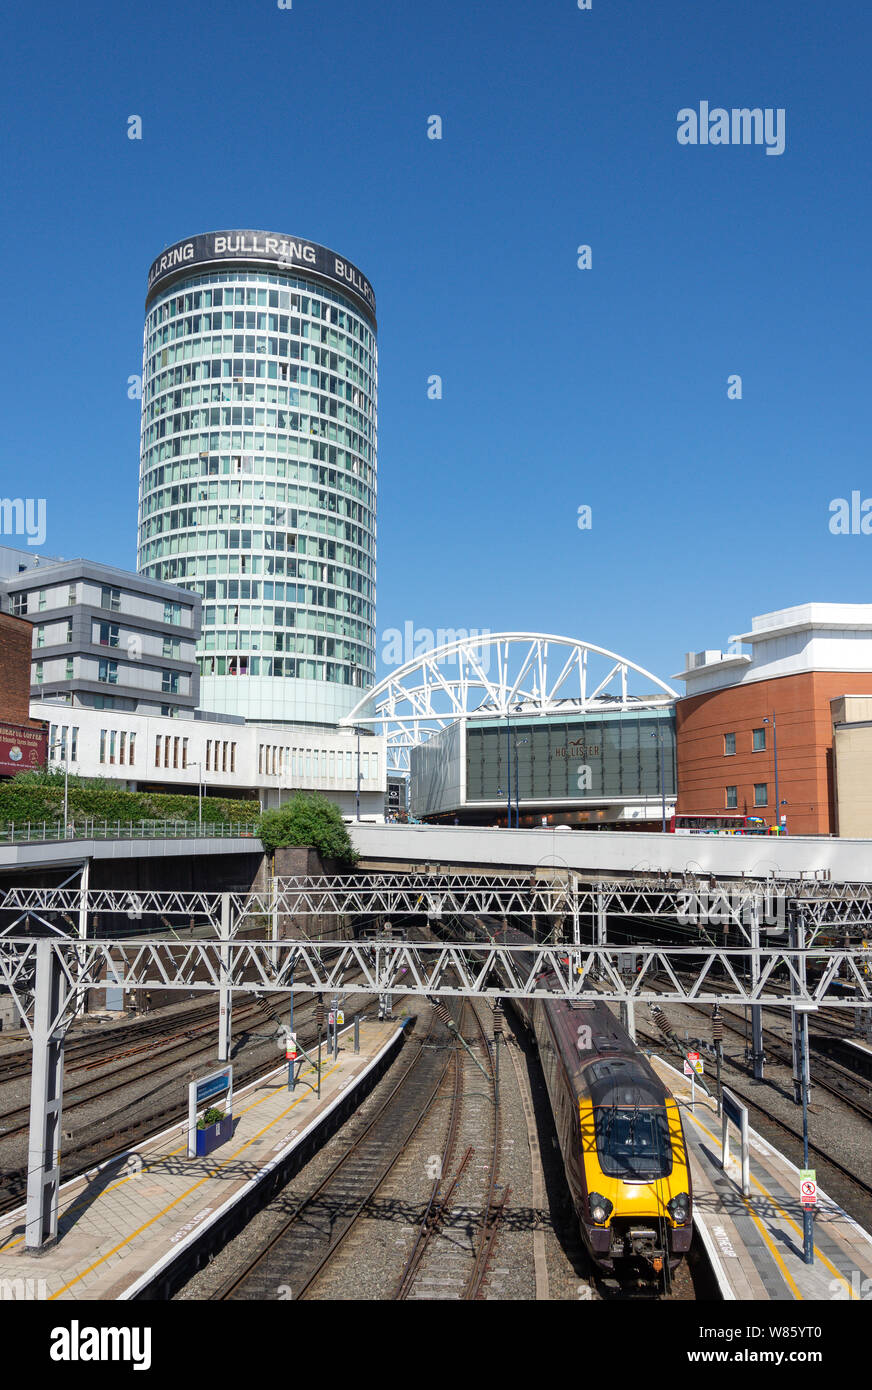 Train on platform at Birmingham New Street Railway Station, Birmingham, West Midlands, England, United Kingdom Stock Photo